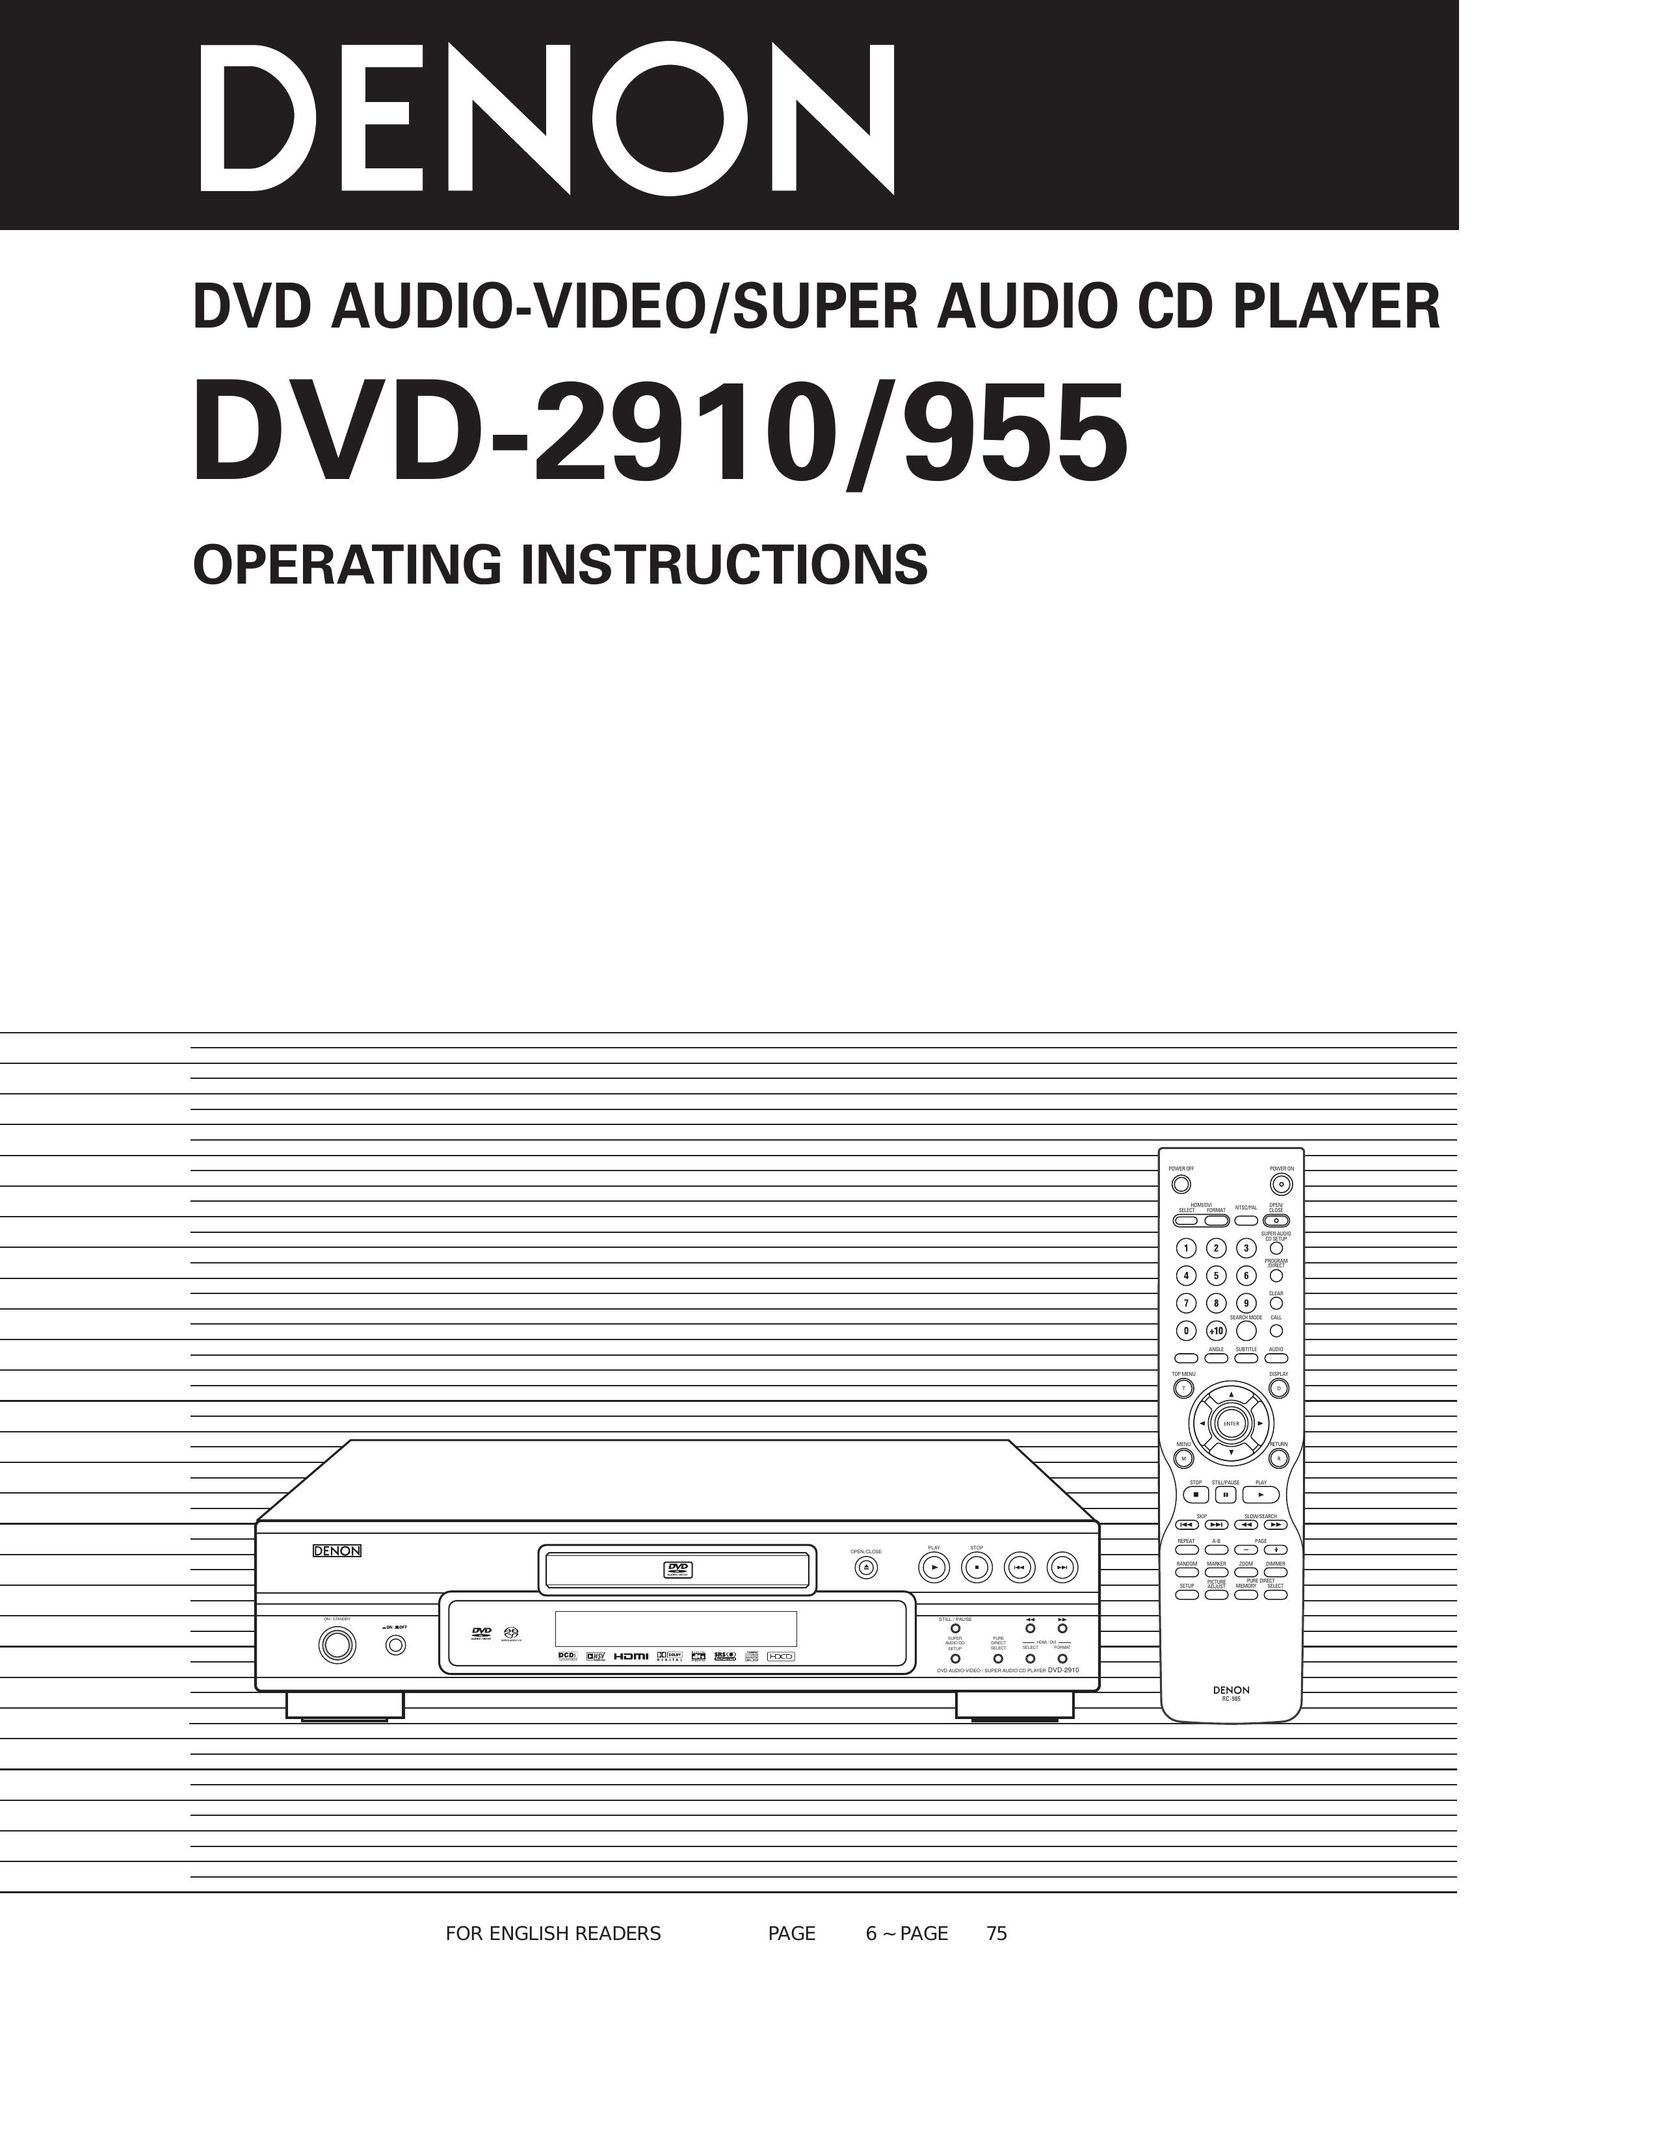 Denon DVD-2910 DVD Player User Manual